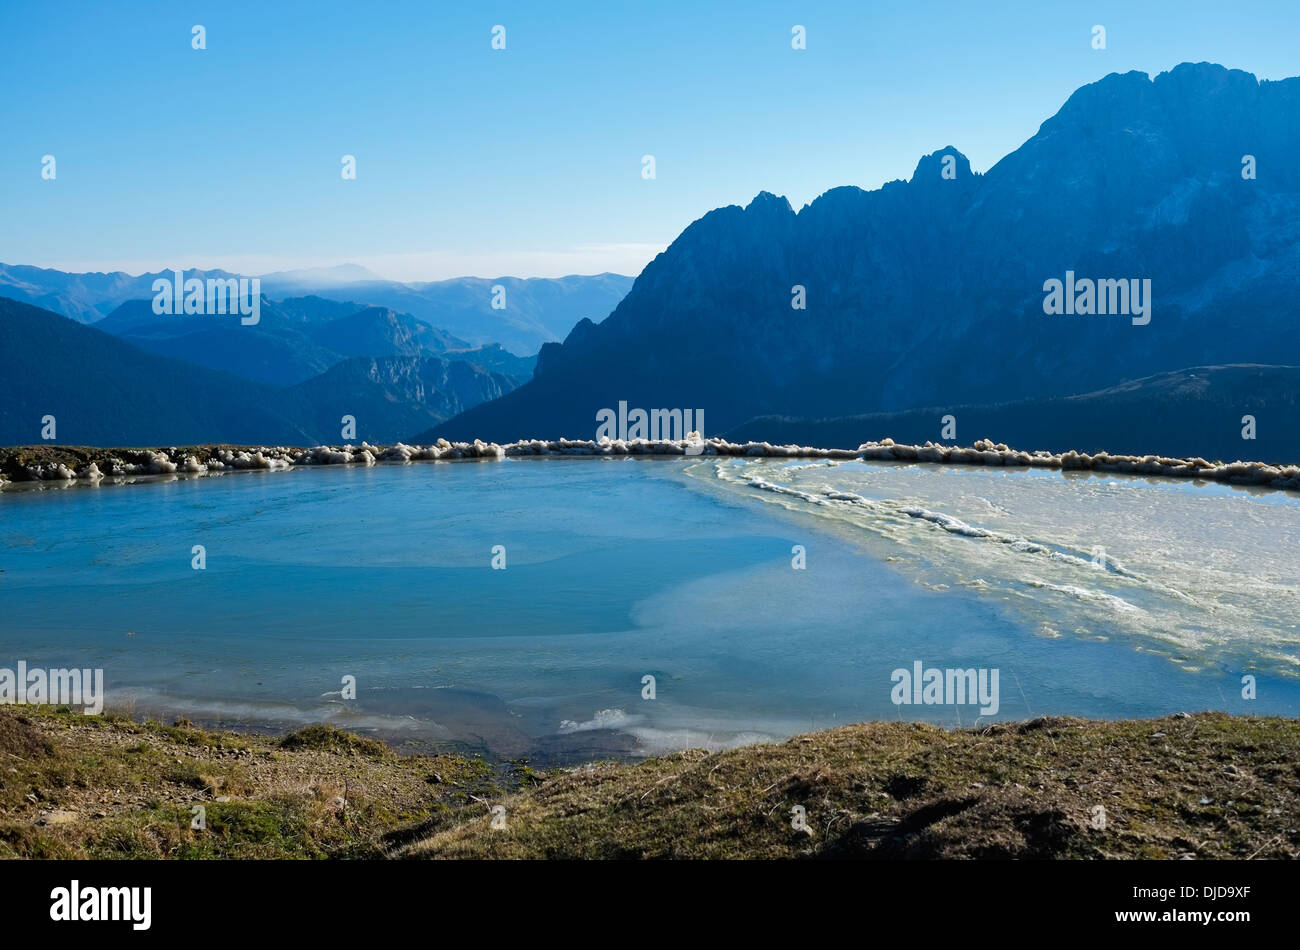 Gefrorenen Bergsee in Val di Scalve, Alpen Montains, Italien Stockfoto